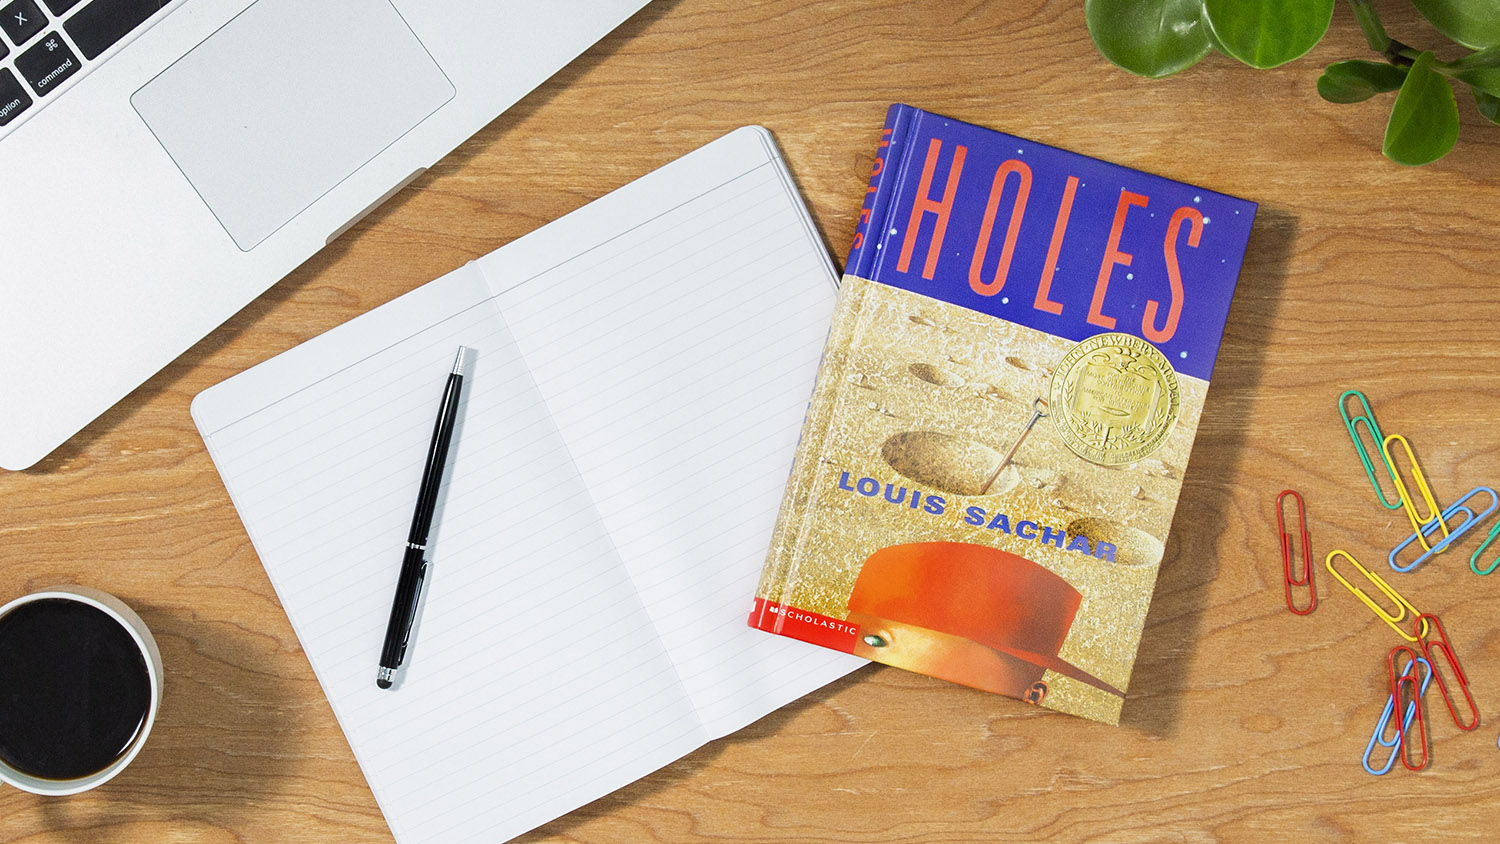 Books like Holes(Holes) by Louis Sachar